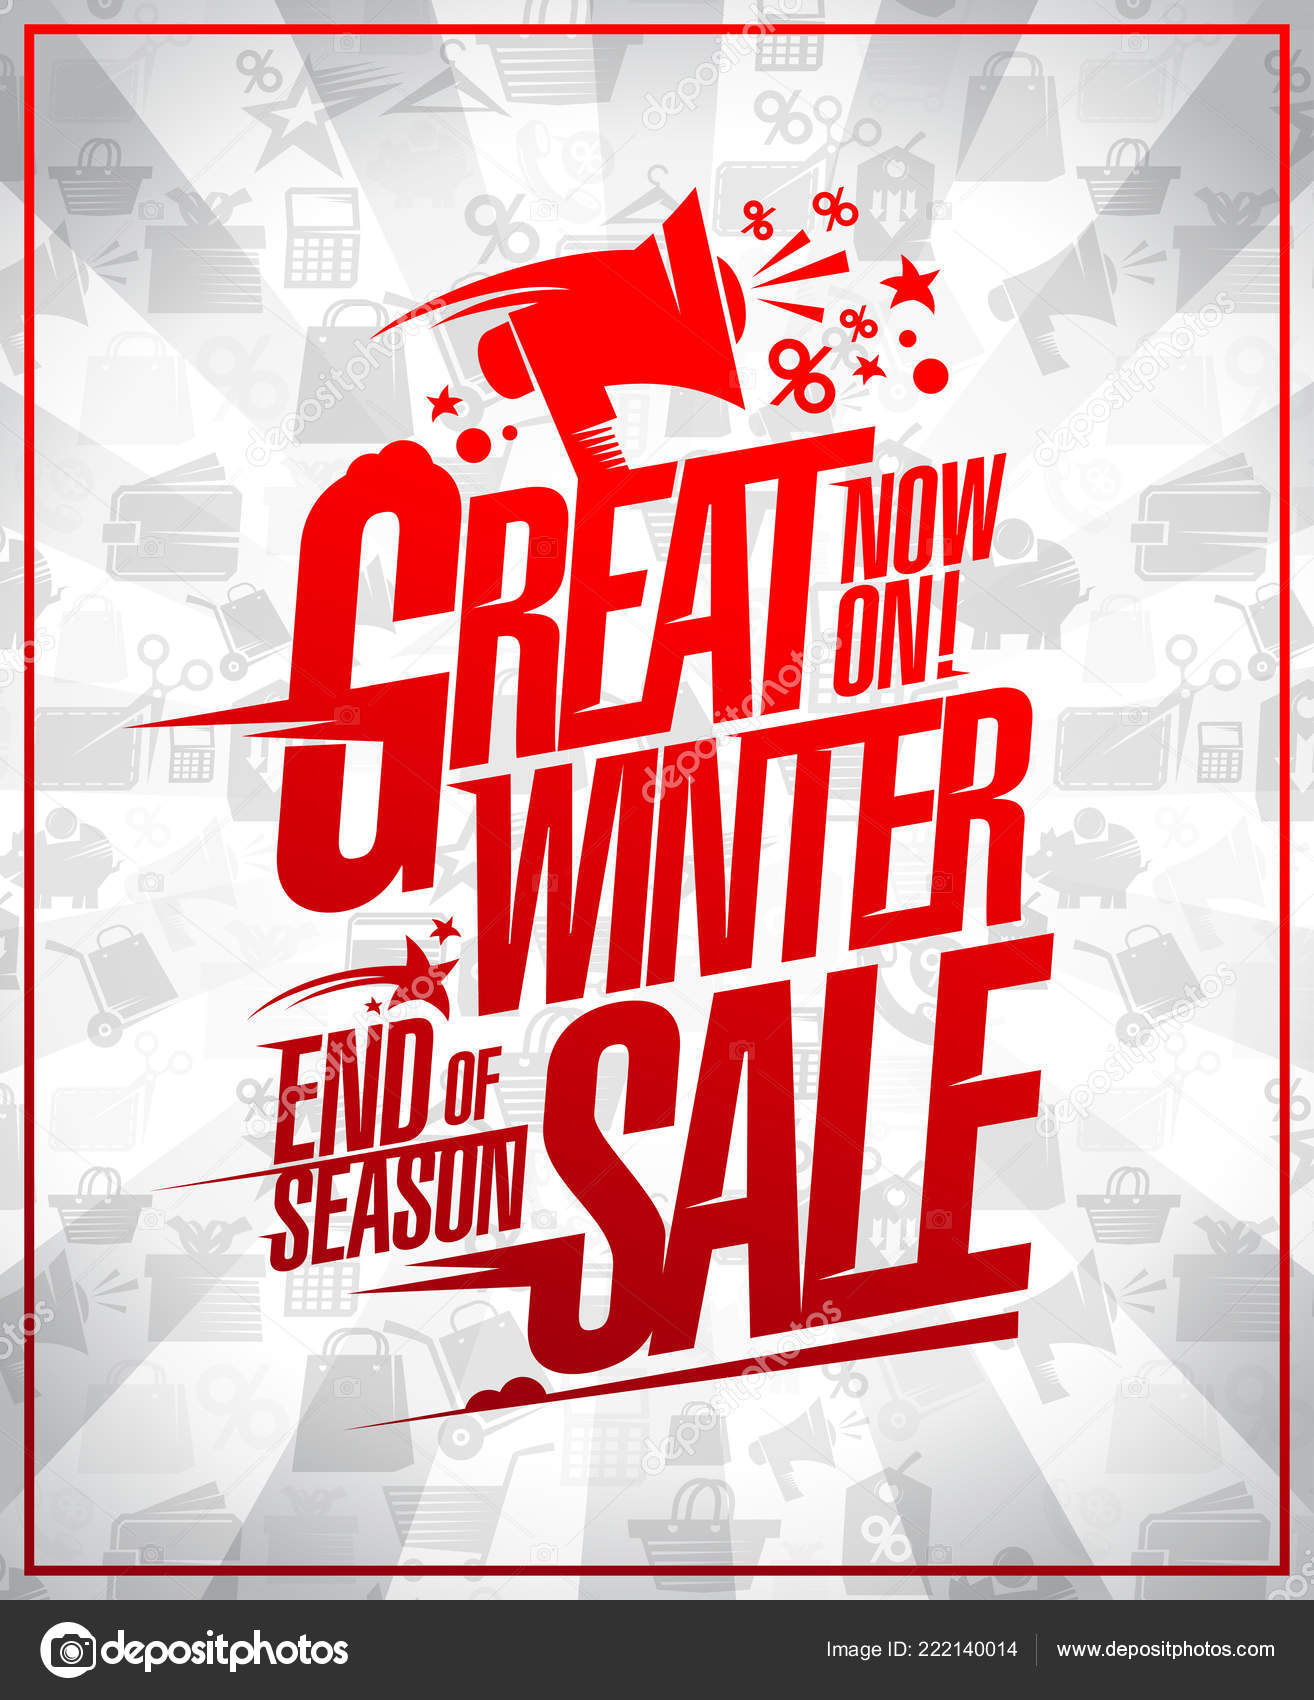 https://st4.depositphotos.com/1807998/22214/v/1600/depositphotos_222140014-stock-illustration-great-winter-sale-poster-concept.jpg